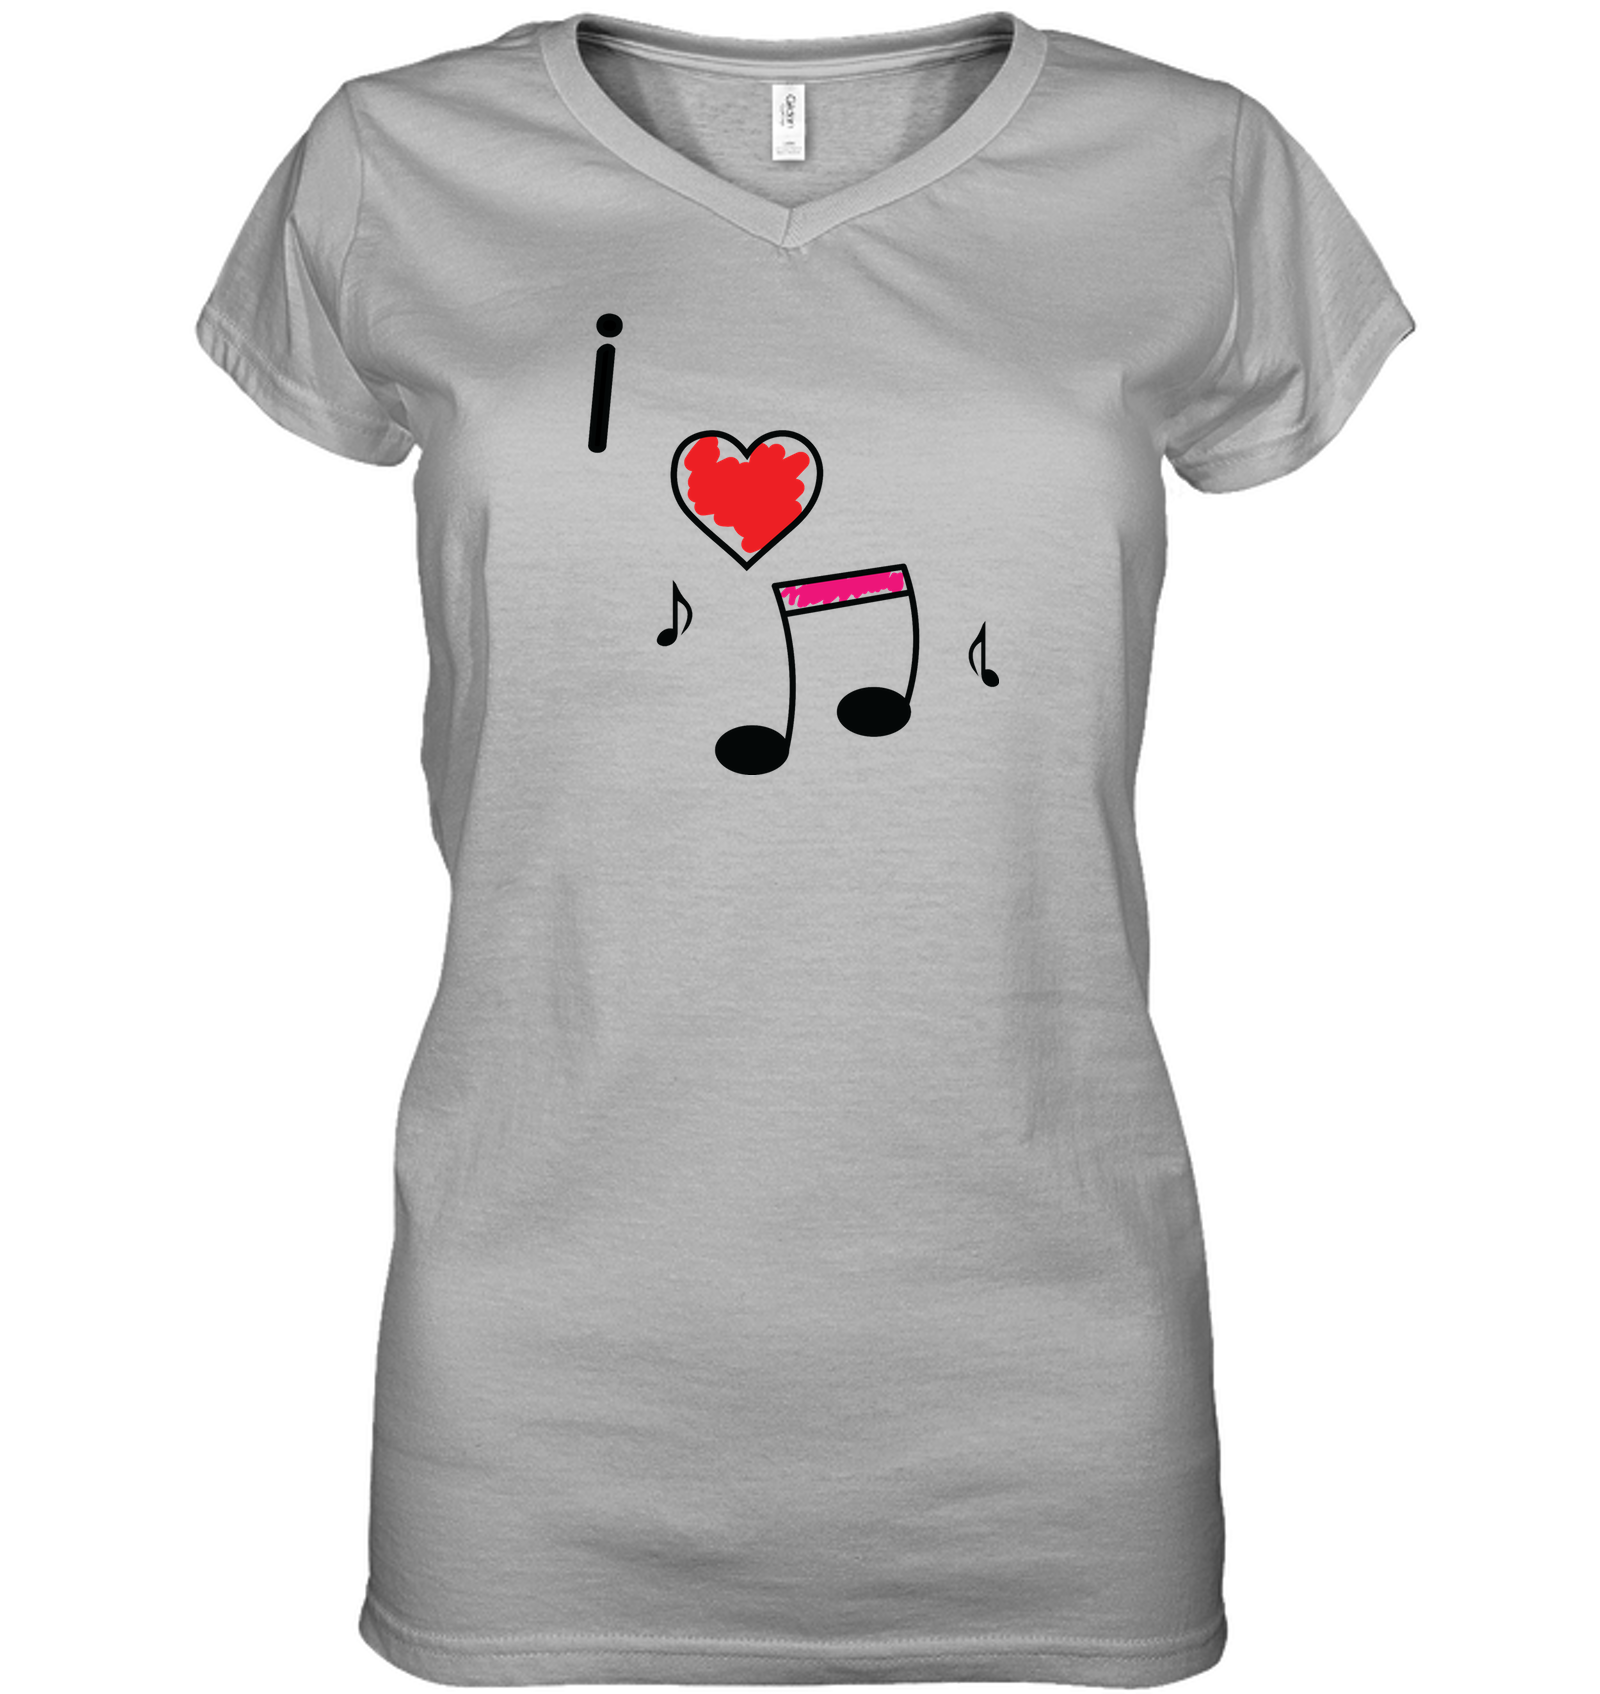 I Love Music Hearts and Fun - Hanes Women's Nano-T® V-Neck T-Shirt